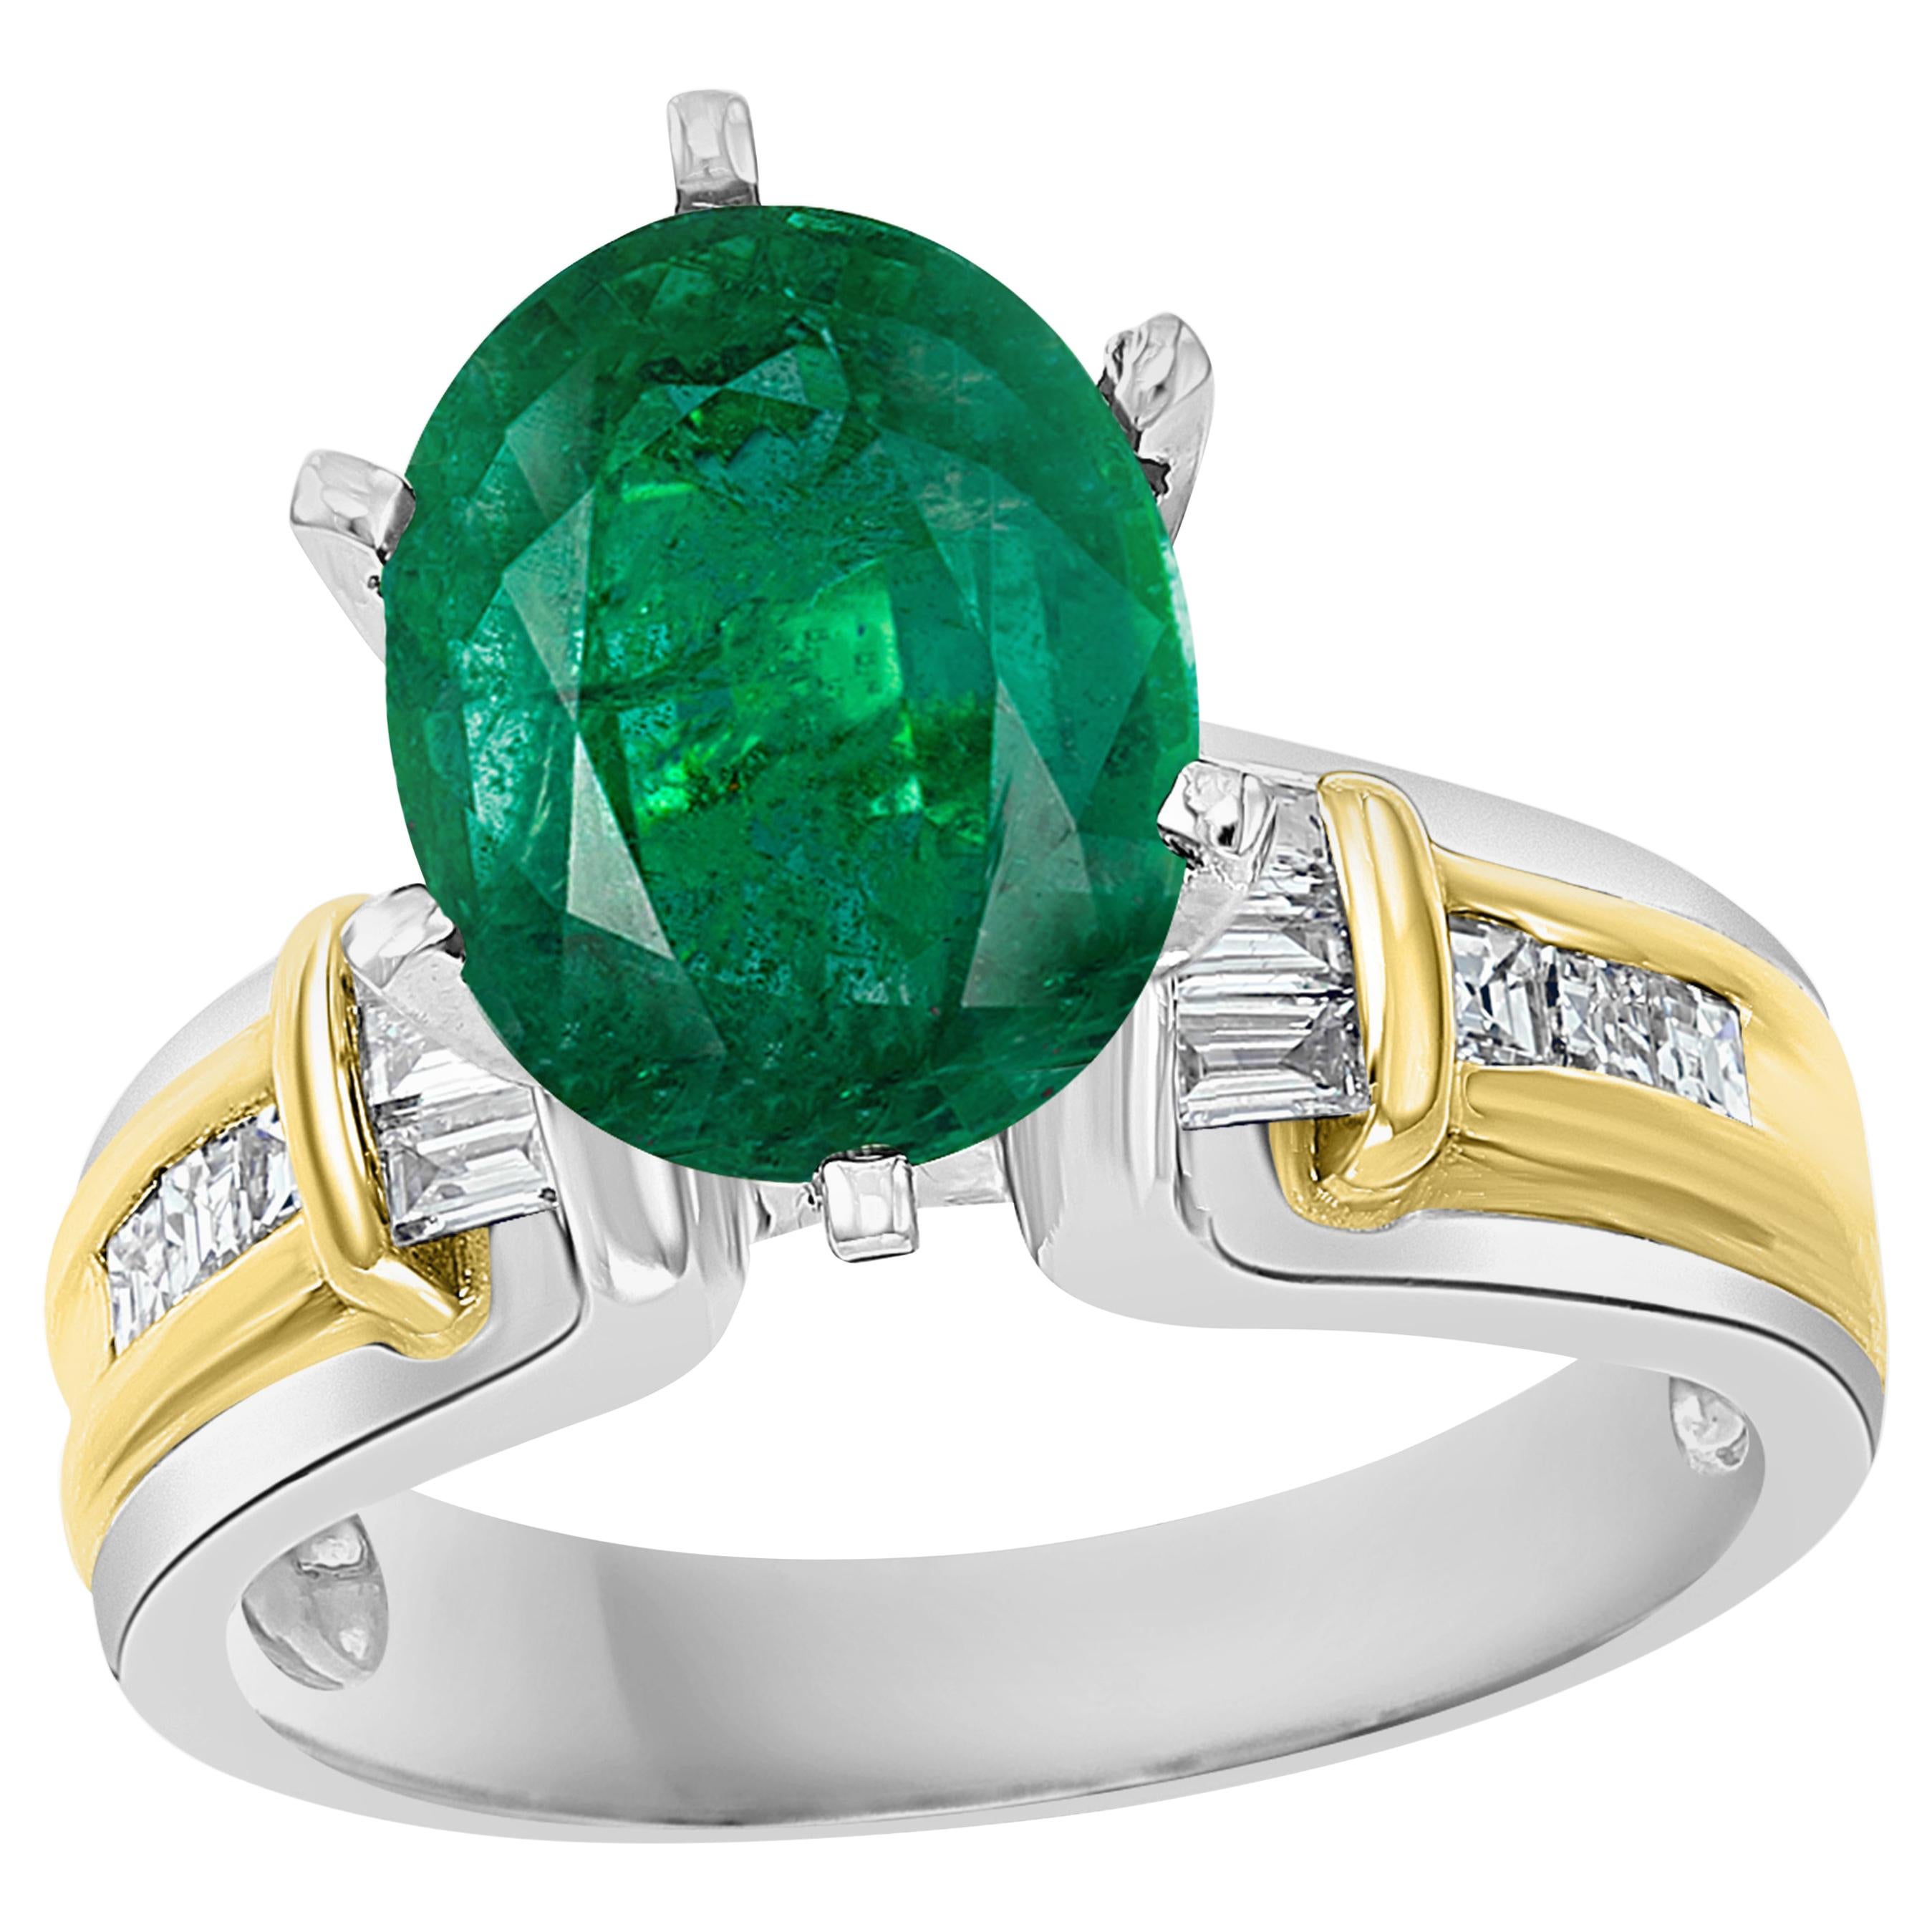 5.5 Carat Oval Cut Emerald and Diamond in 18 Karat/Platinum Two-Tone Ring Estate